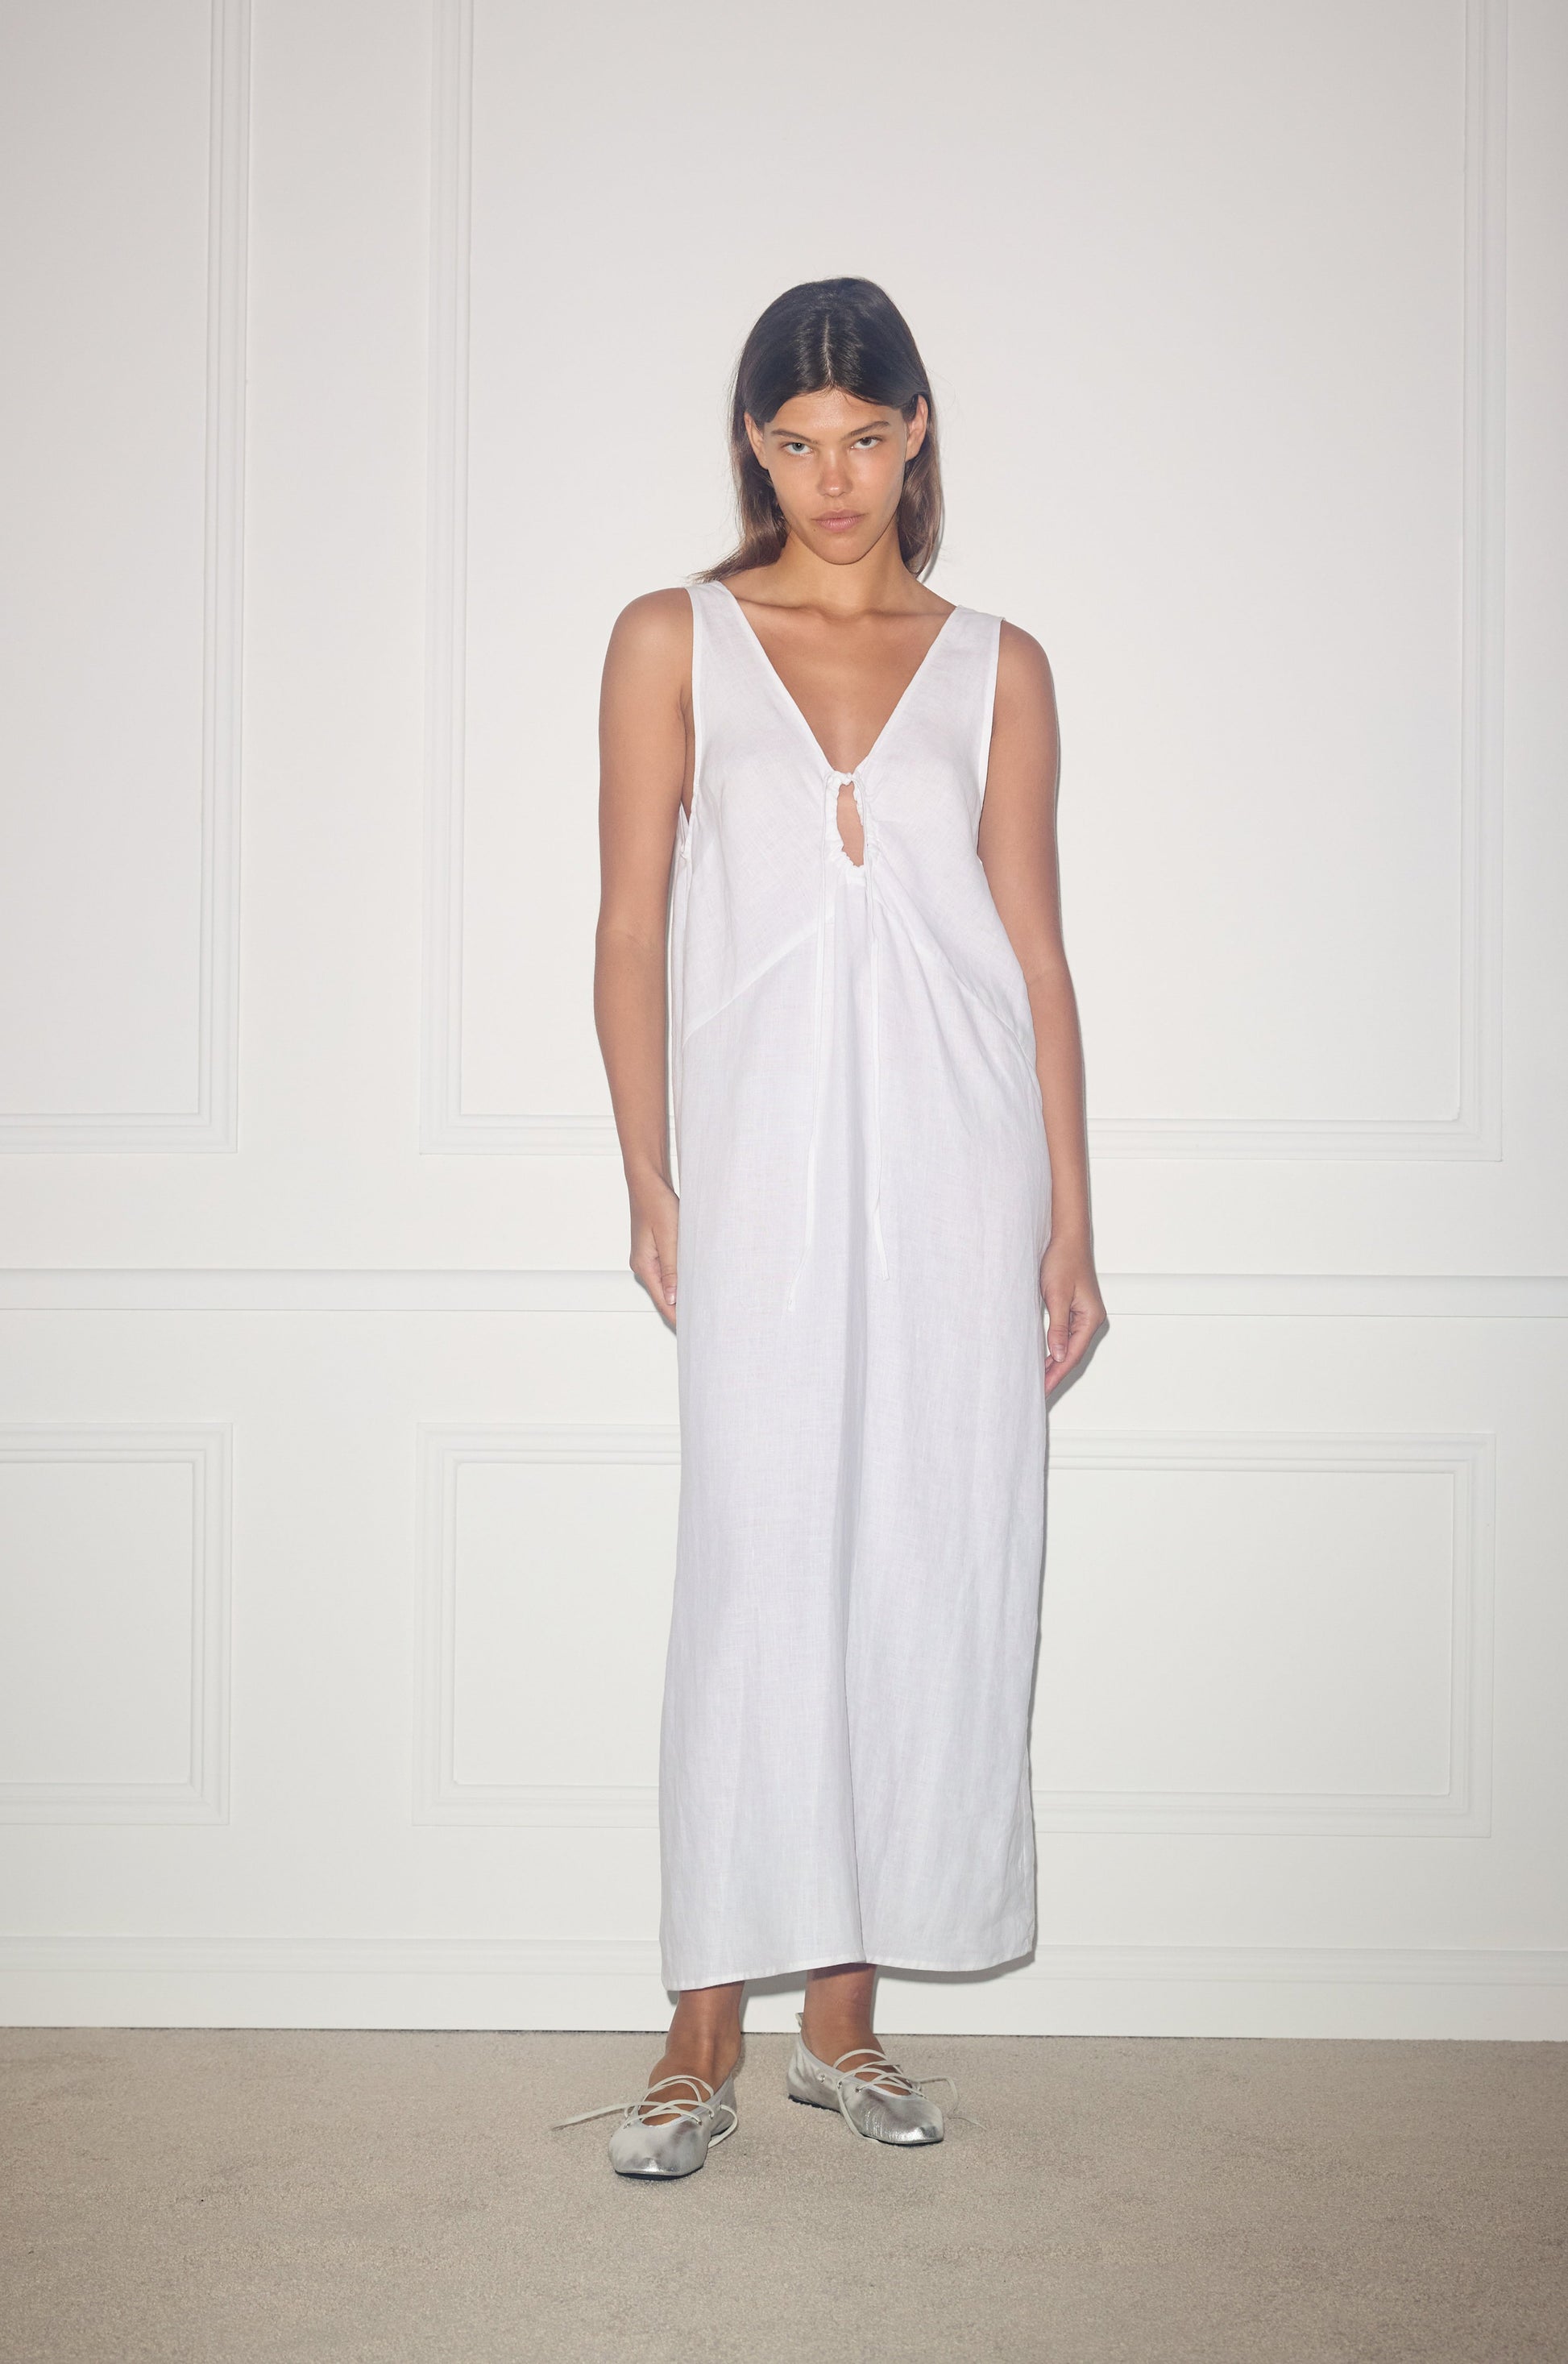 Female model wearing Keyhole Dress - White by Deiji Studios against plain background